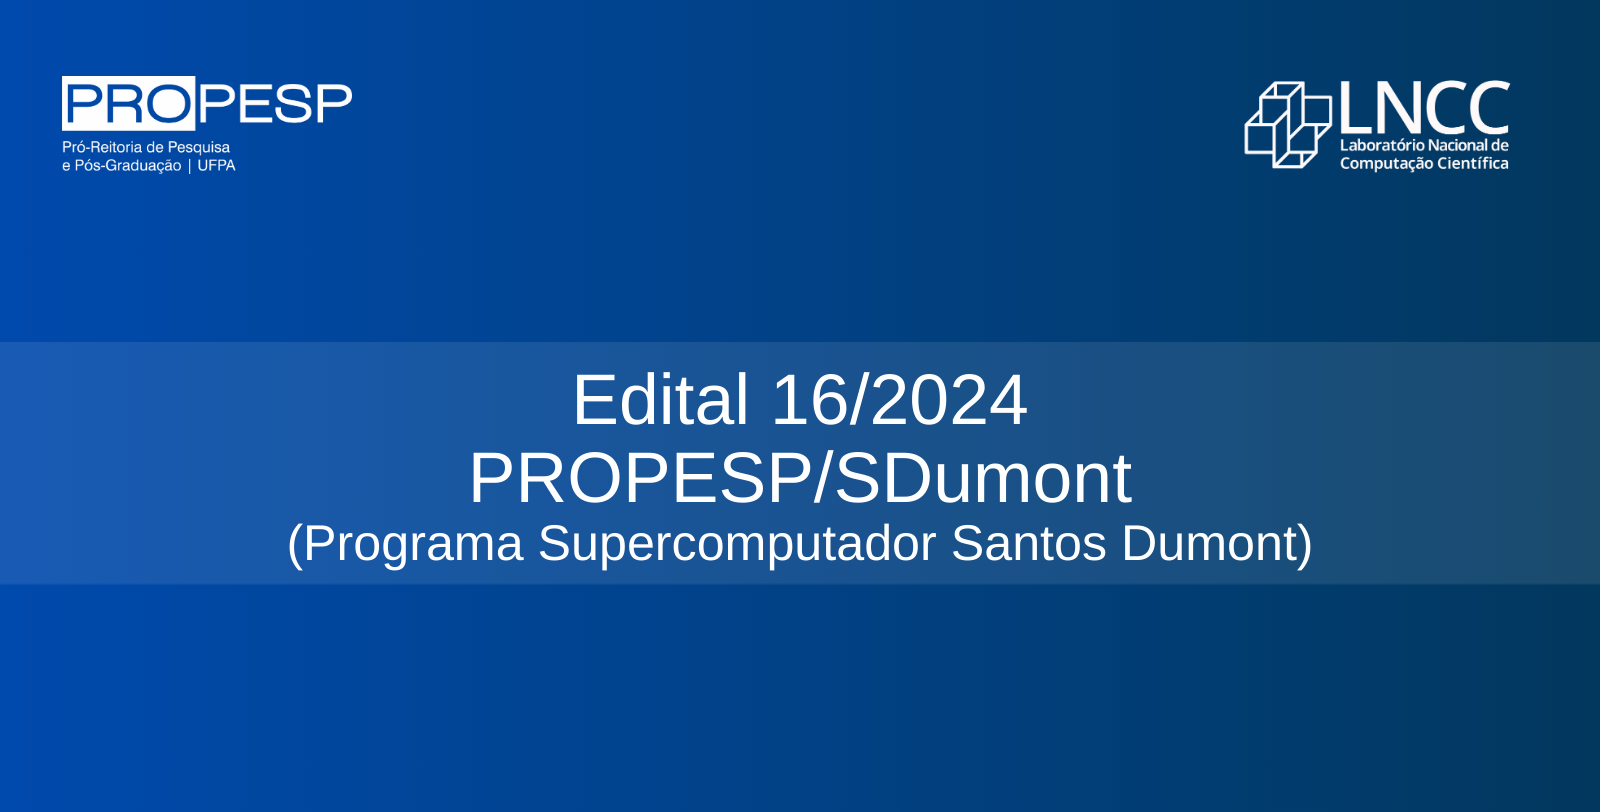 Edital 16/2024 - PROPESP/SDumont (Programa Supercomputador Santos Dumont) - Submissão Prorrogada